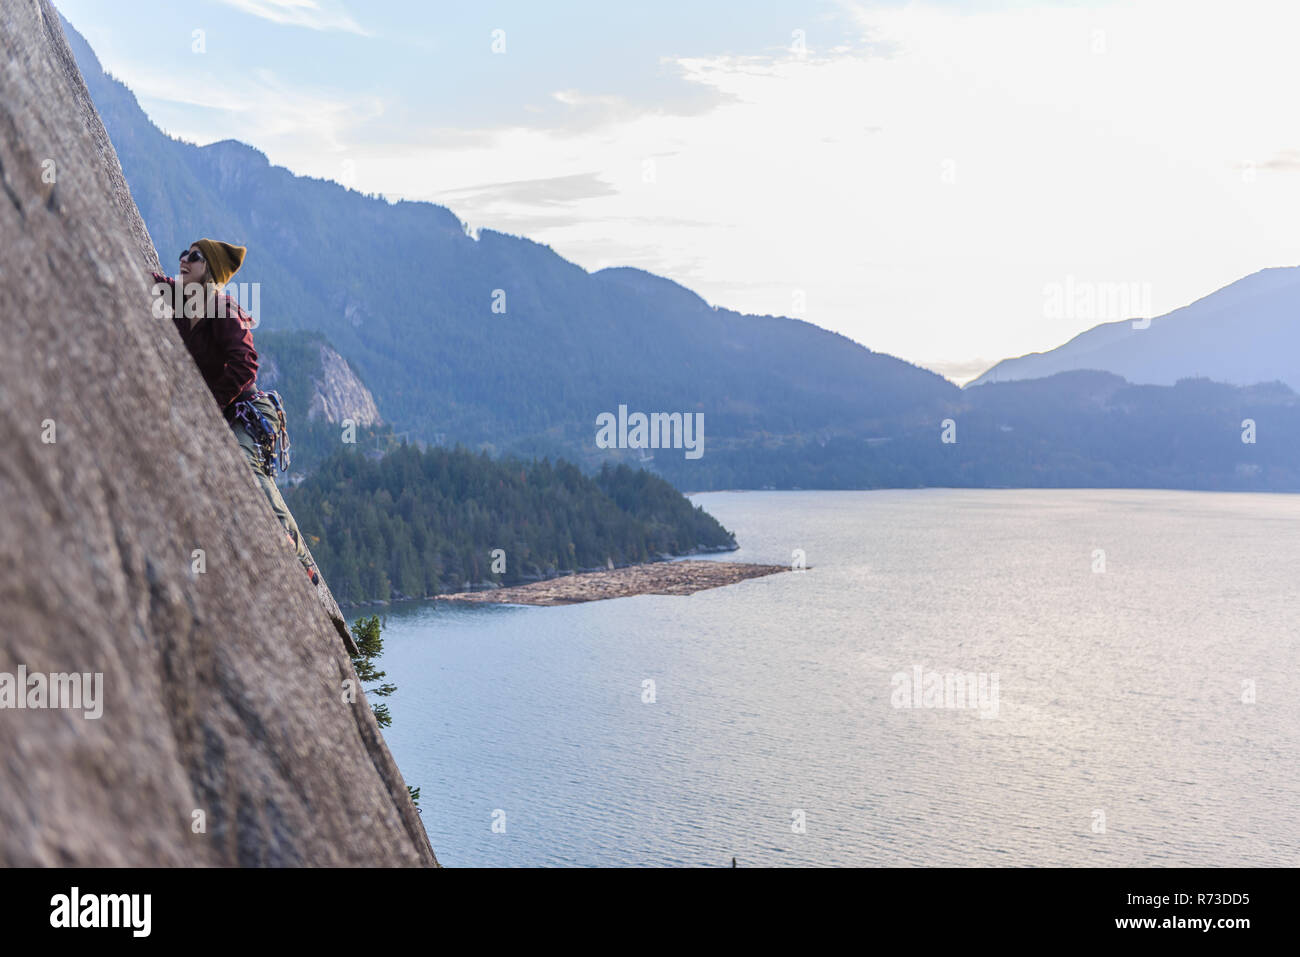 Kletterer auf Malamute, Squamish, Kanada Stockfoto